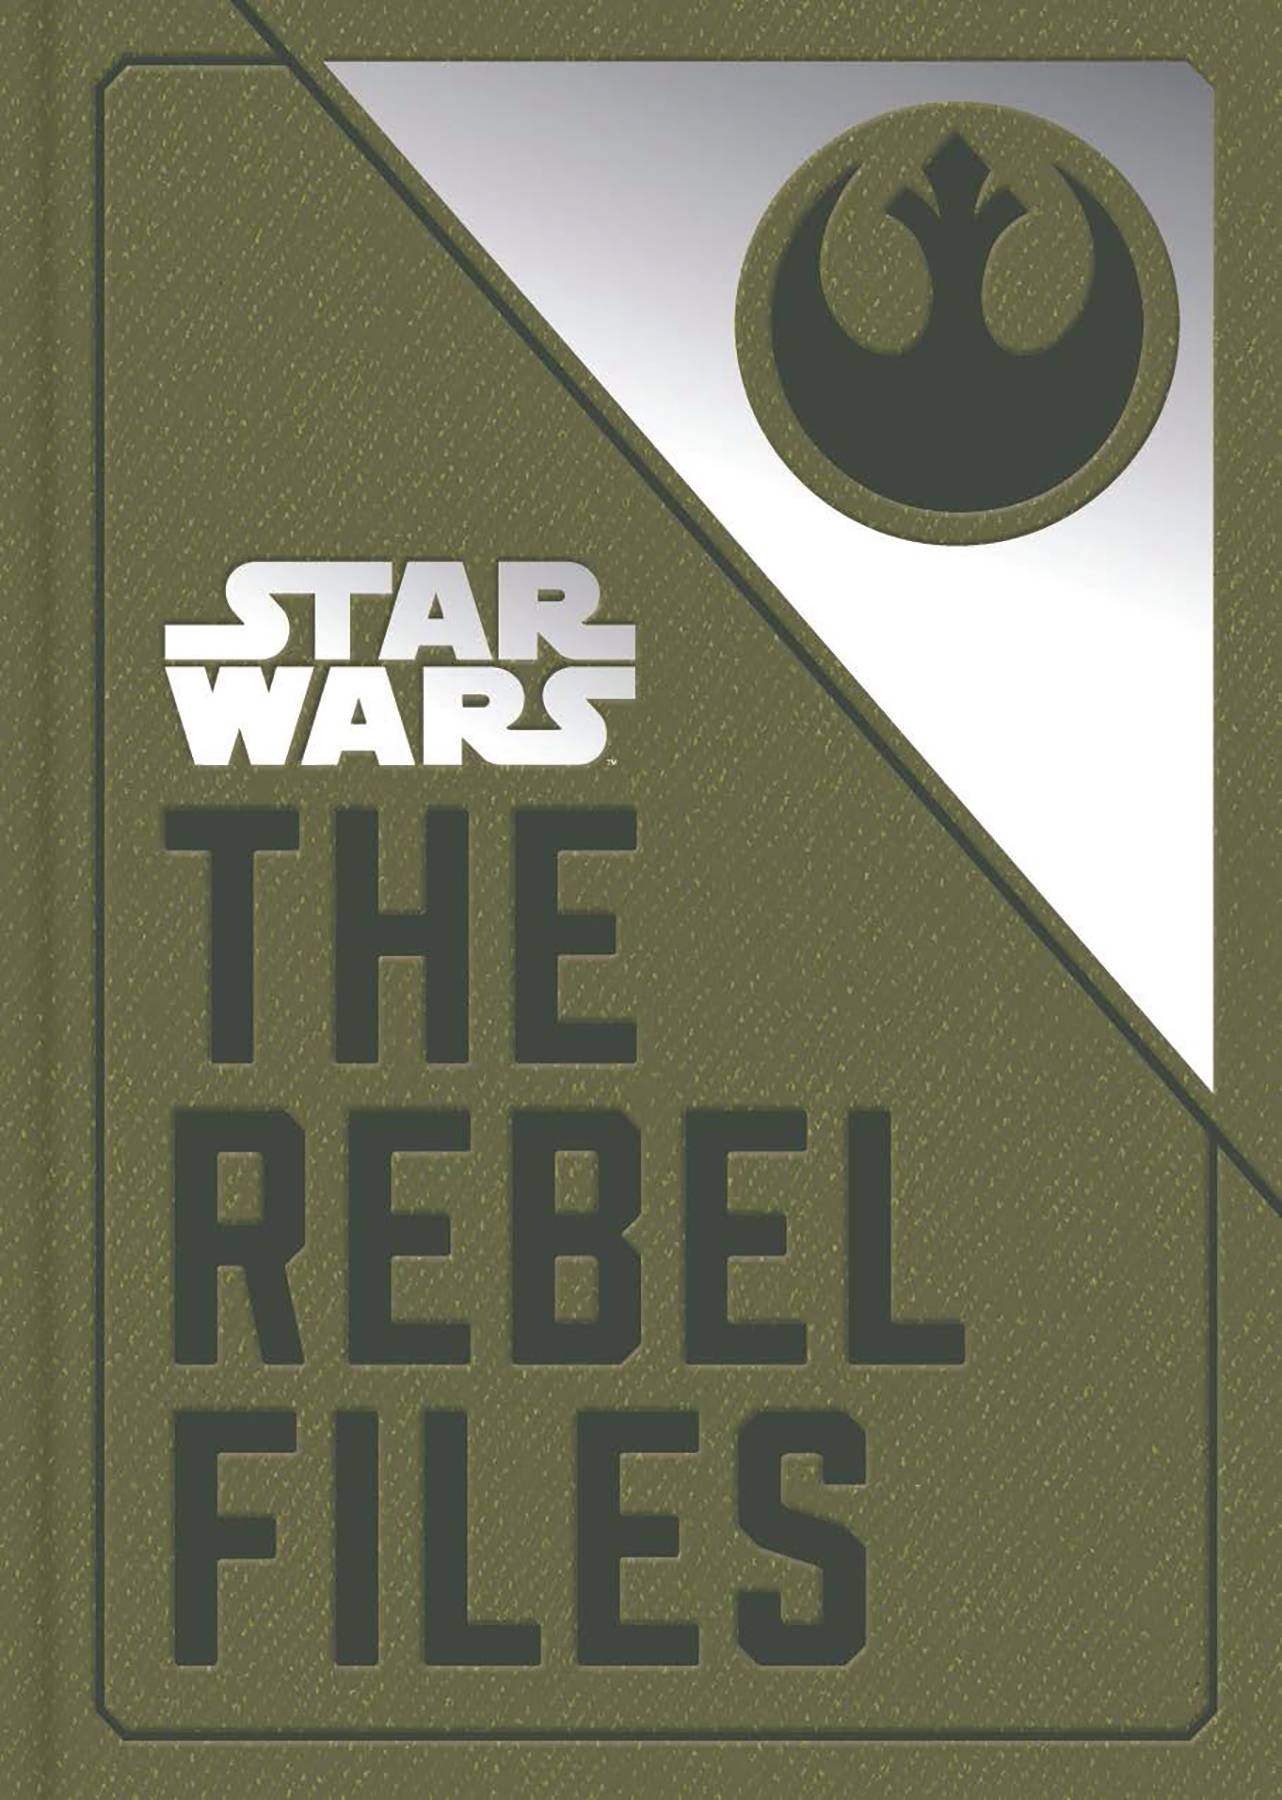 Star Wars Rebel Files Hardcover